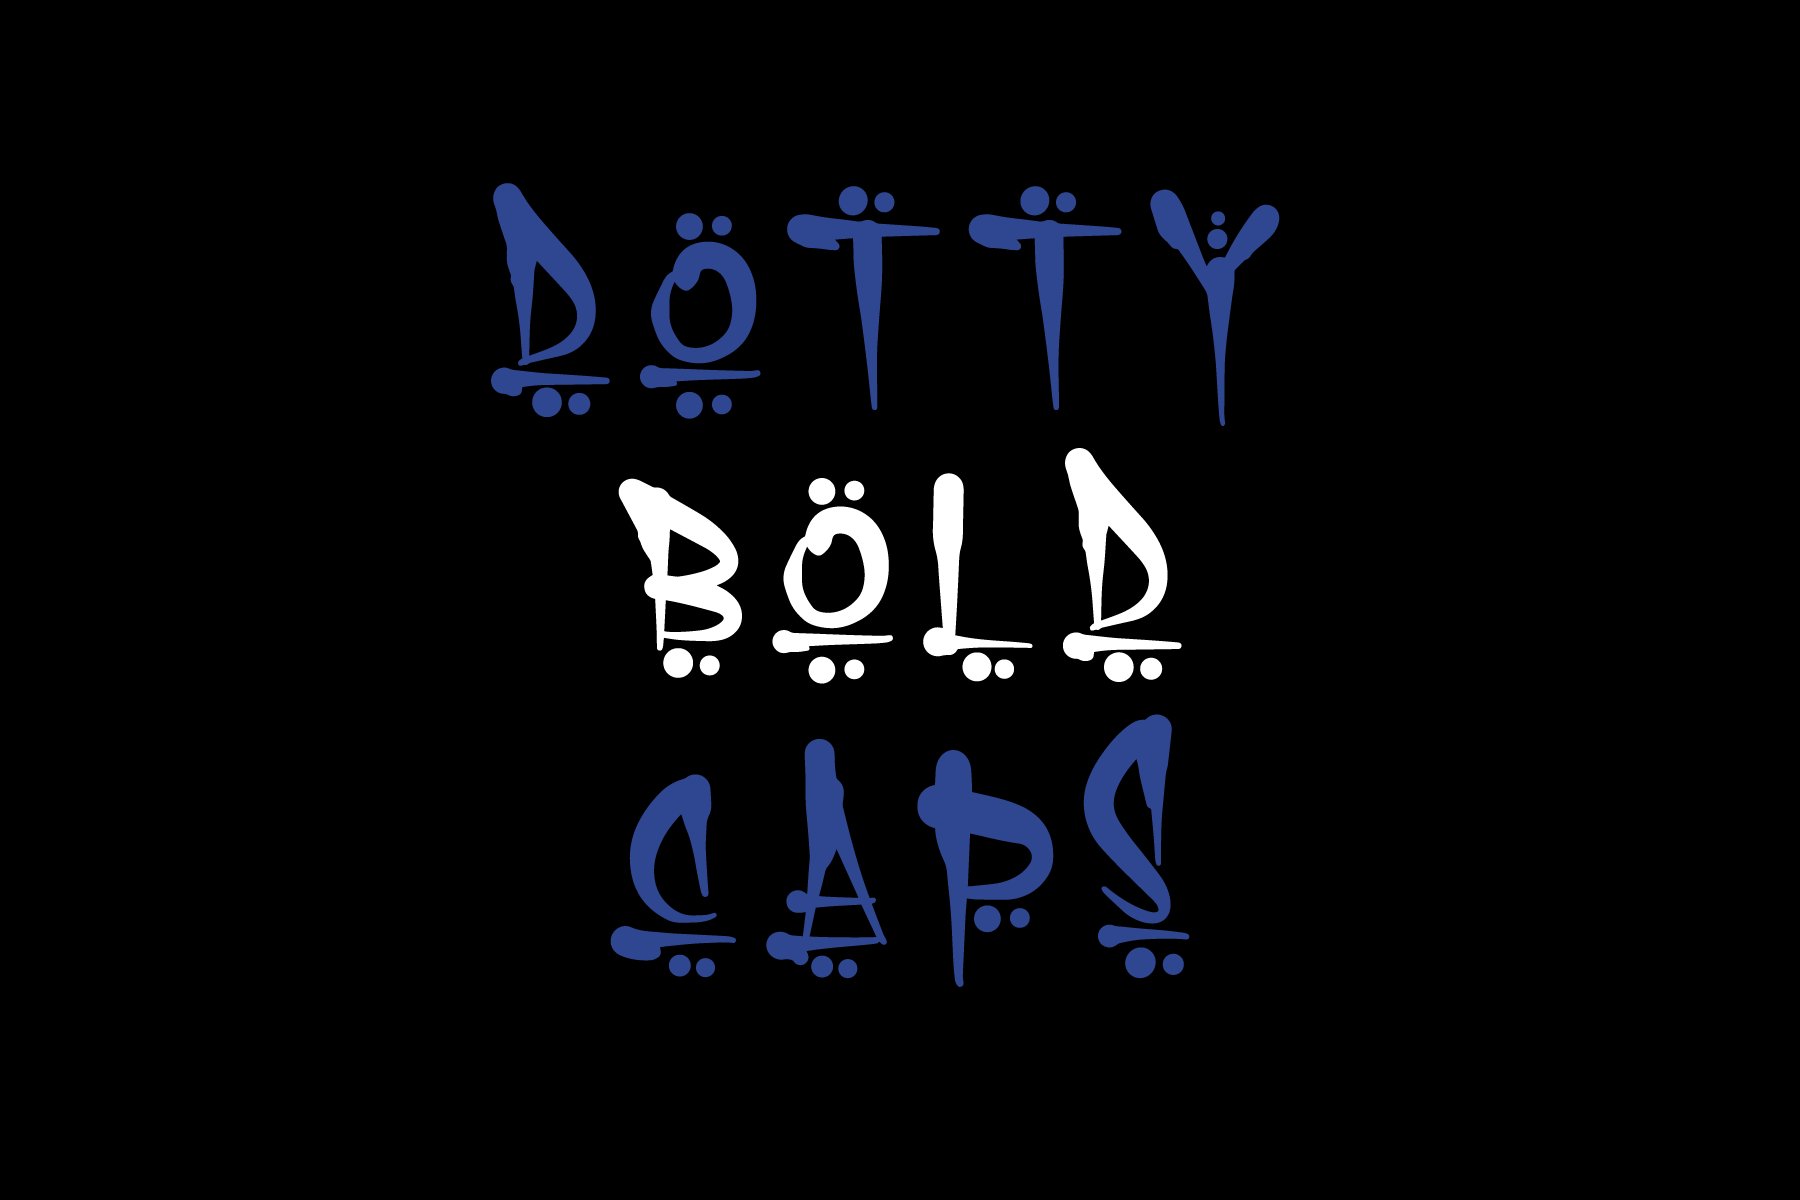 dottyboldcaps preview03 01 602